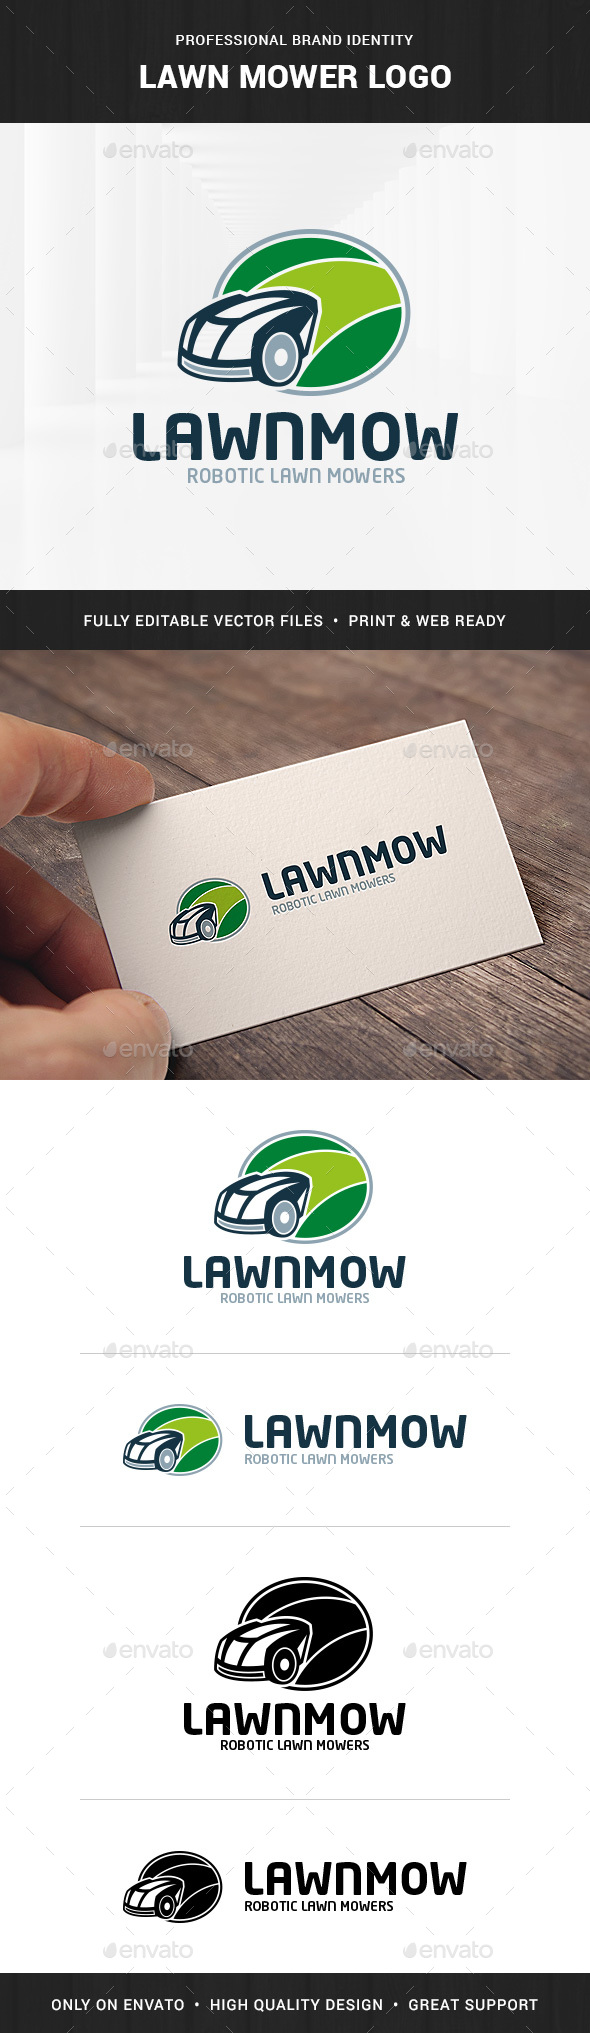 Lawn Mower Logo Template